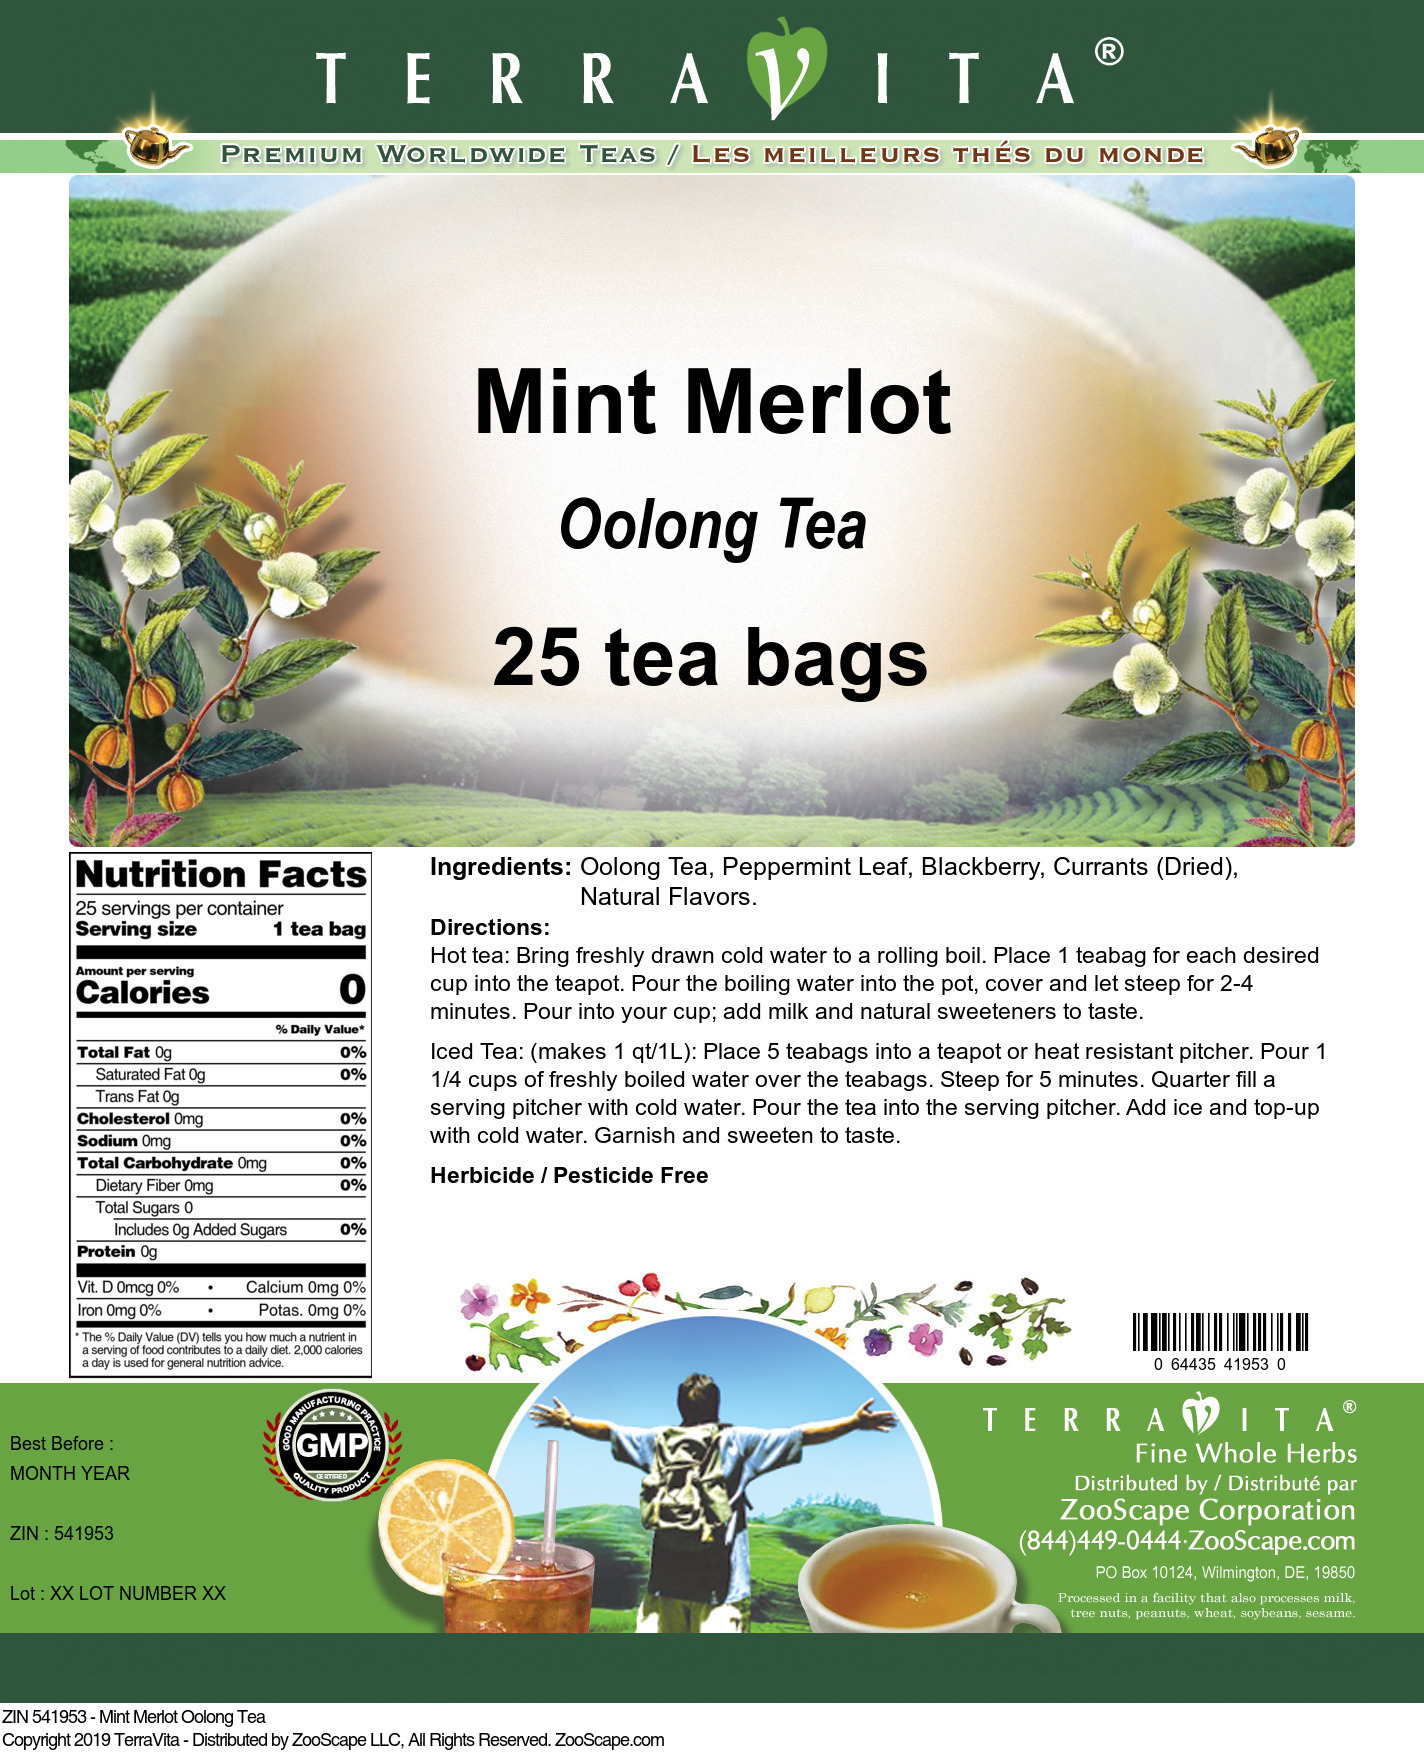 Mint Merlot Oolong Tea - Label